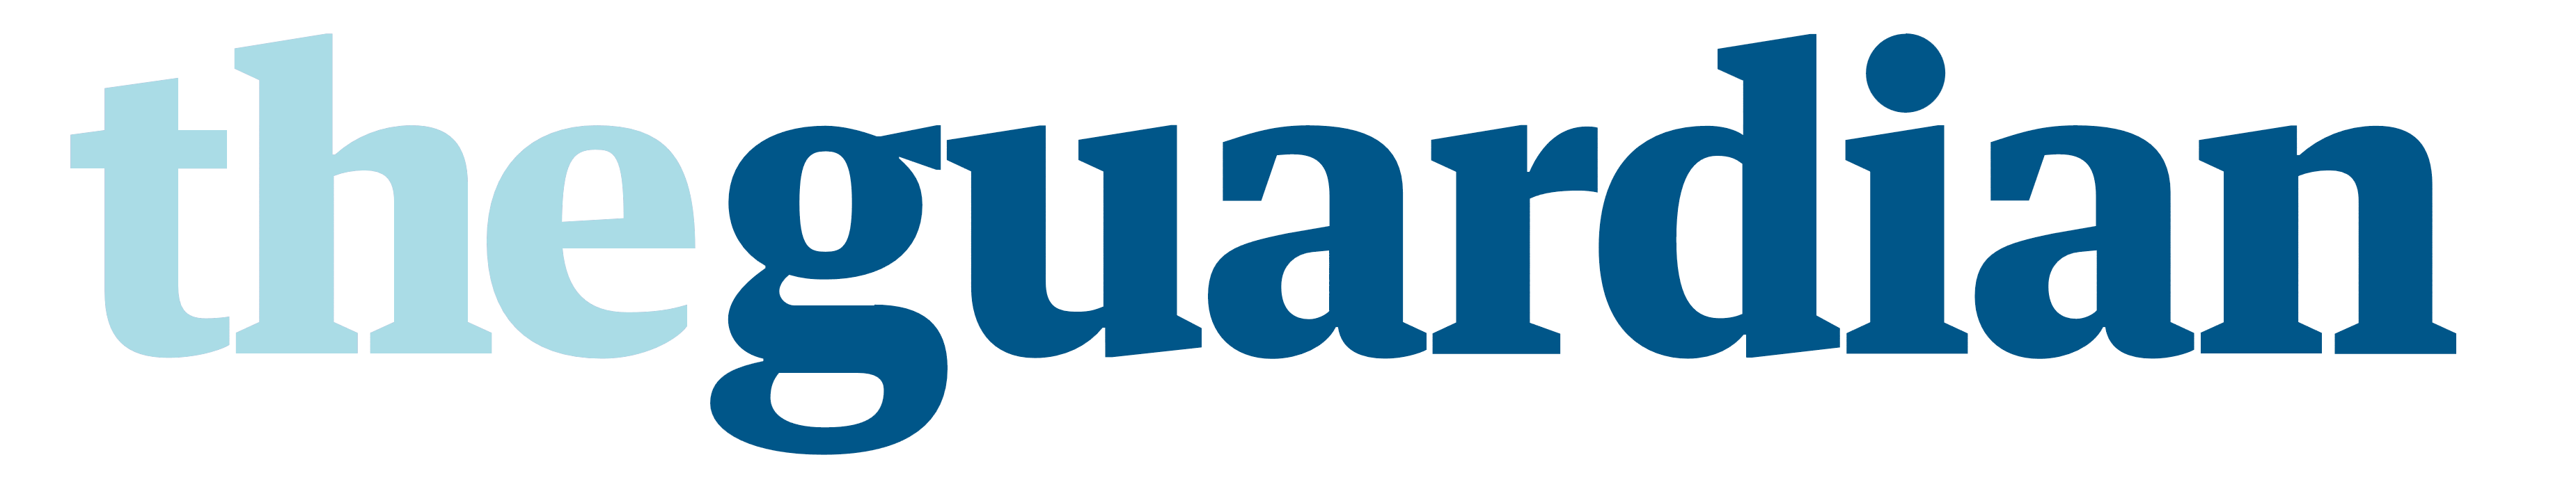 The Guardian logo, logotype